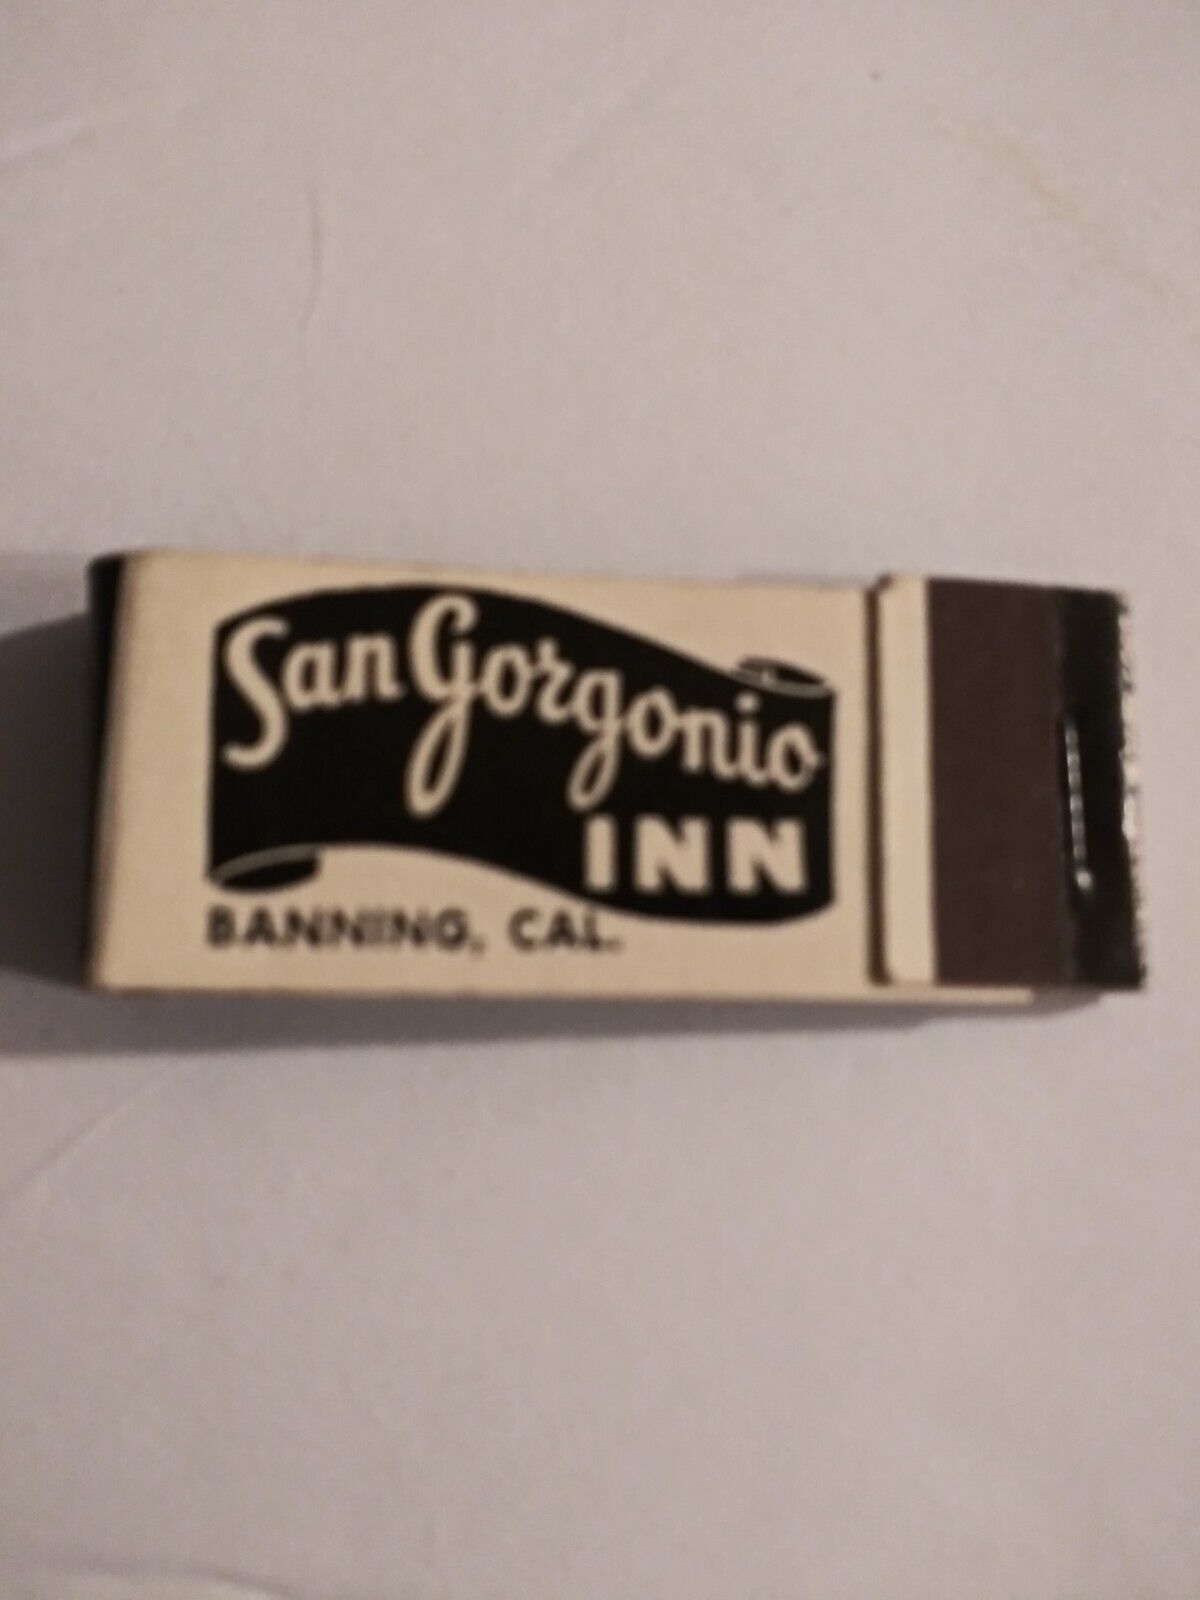 Vintage Matches From San Gorgonio Inn Banning California